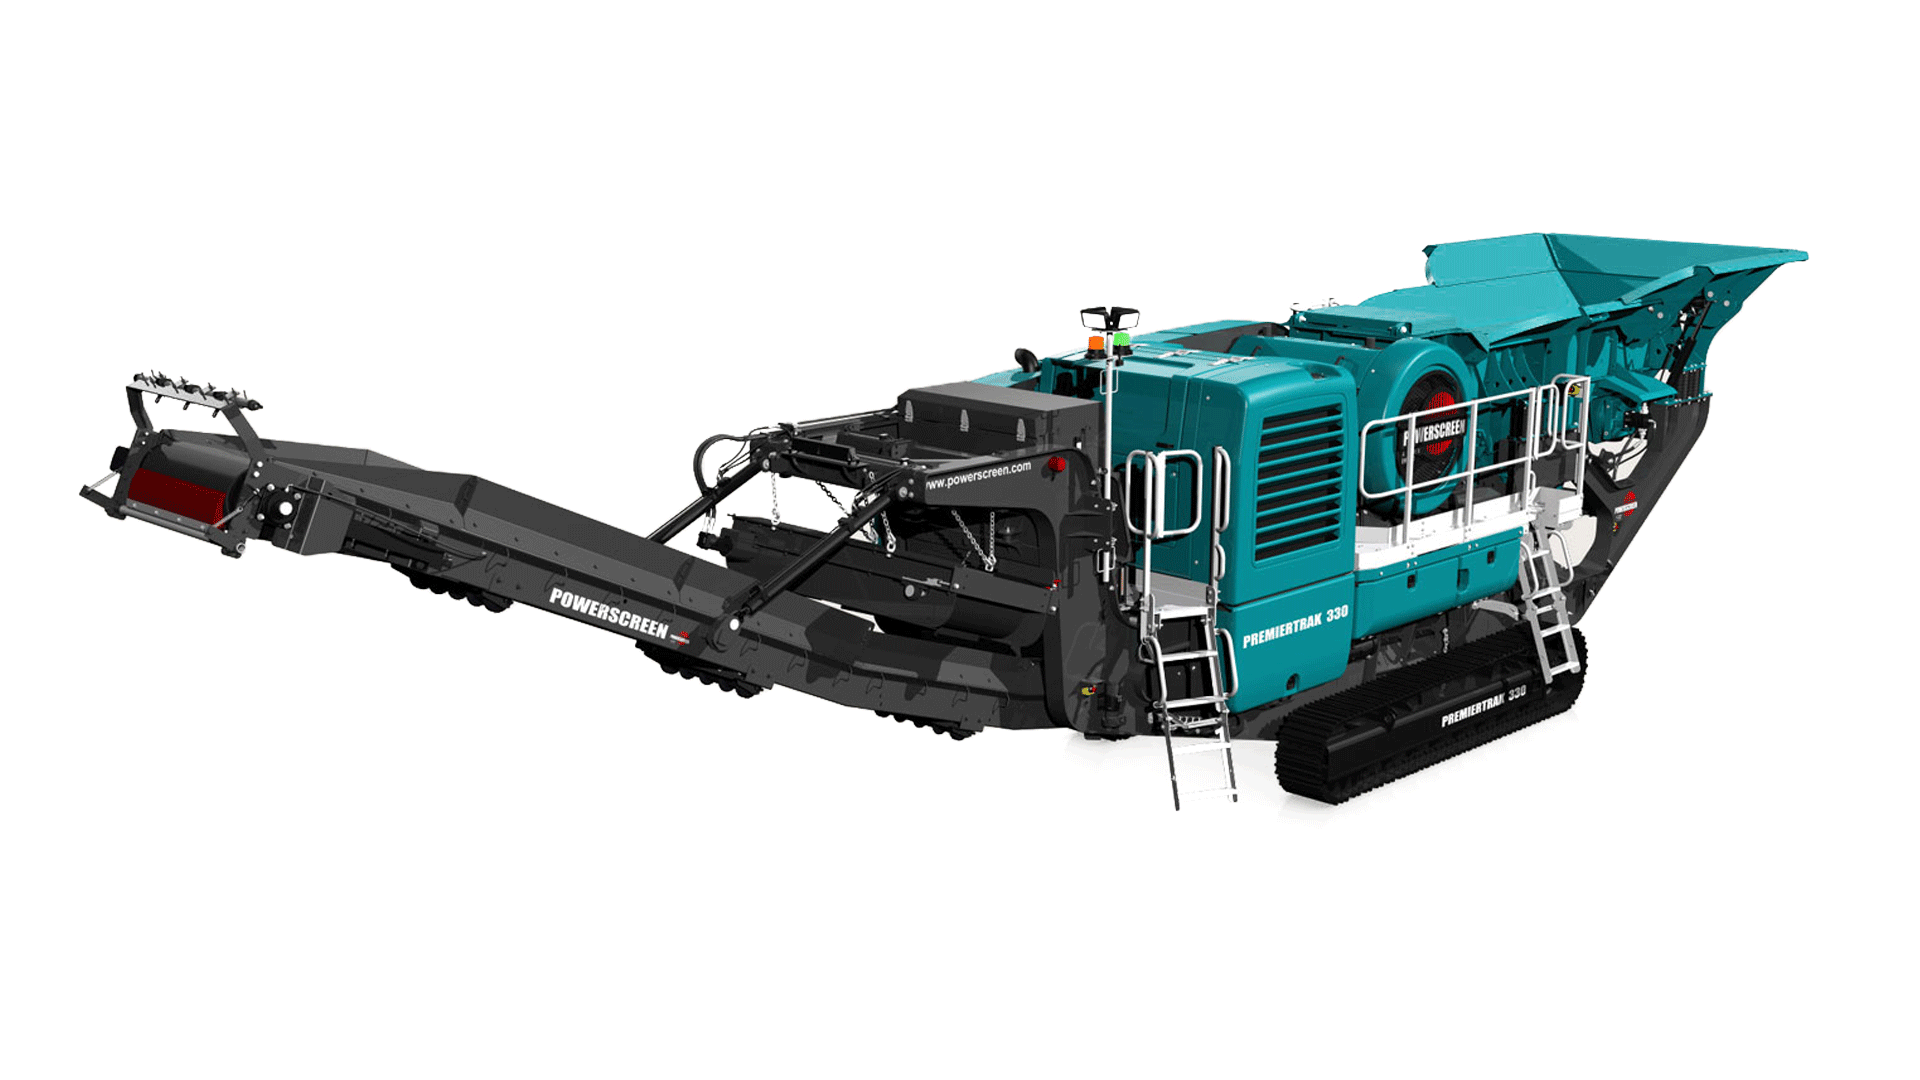 Premiertrak 330